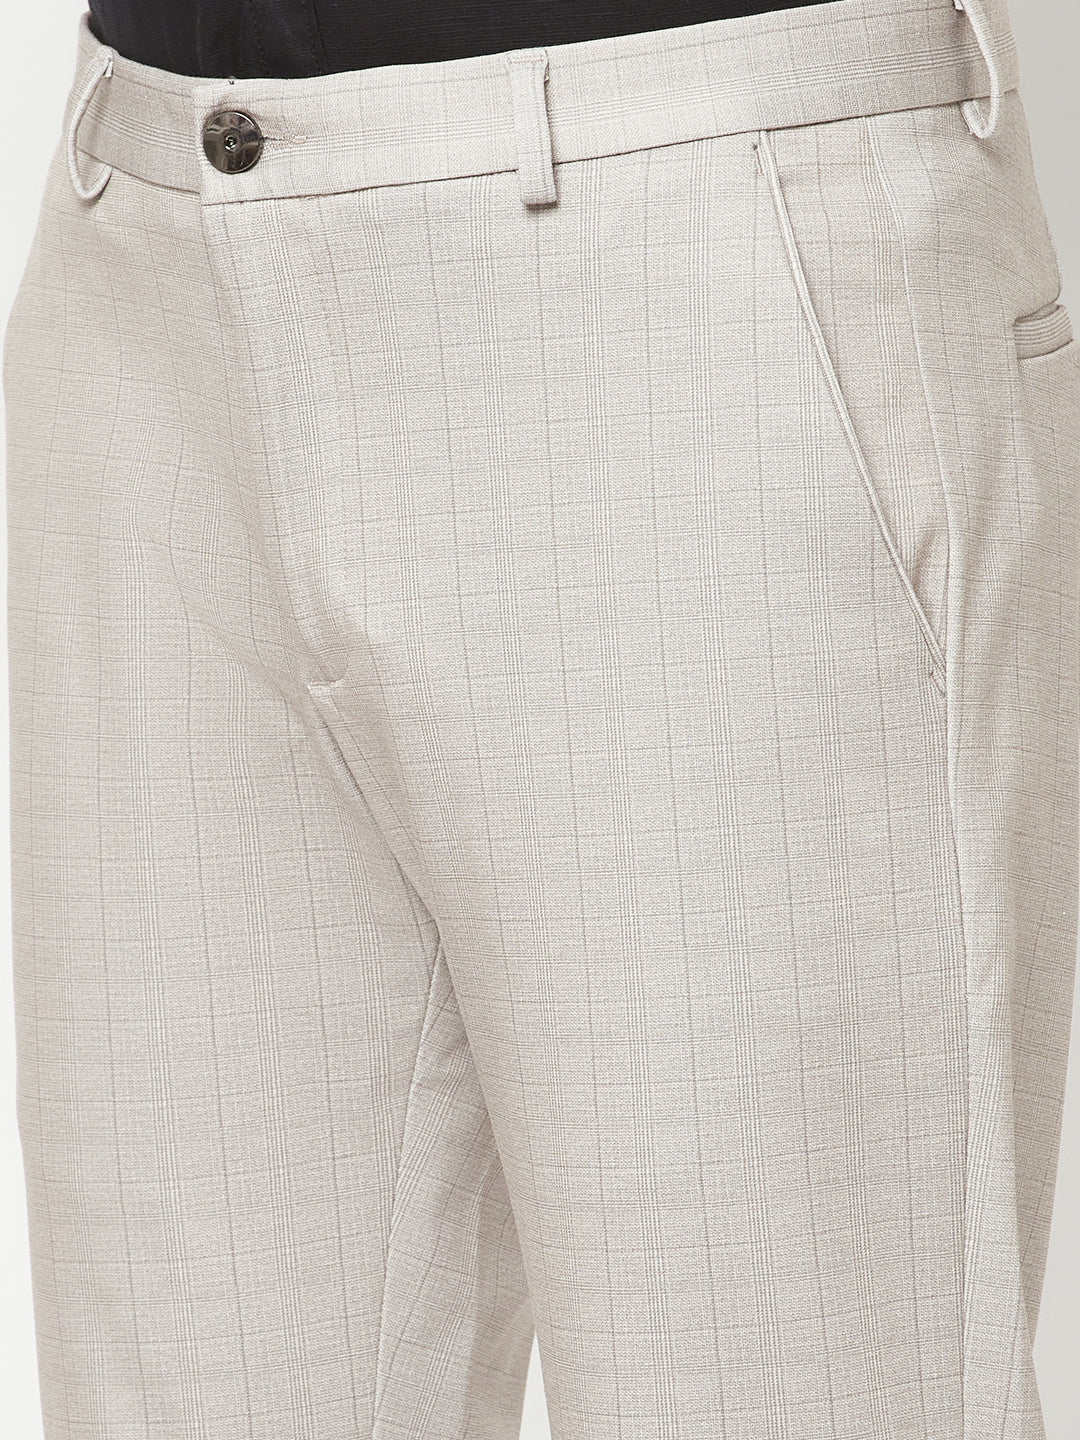 Grey Printed Formal Trousers